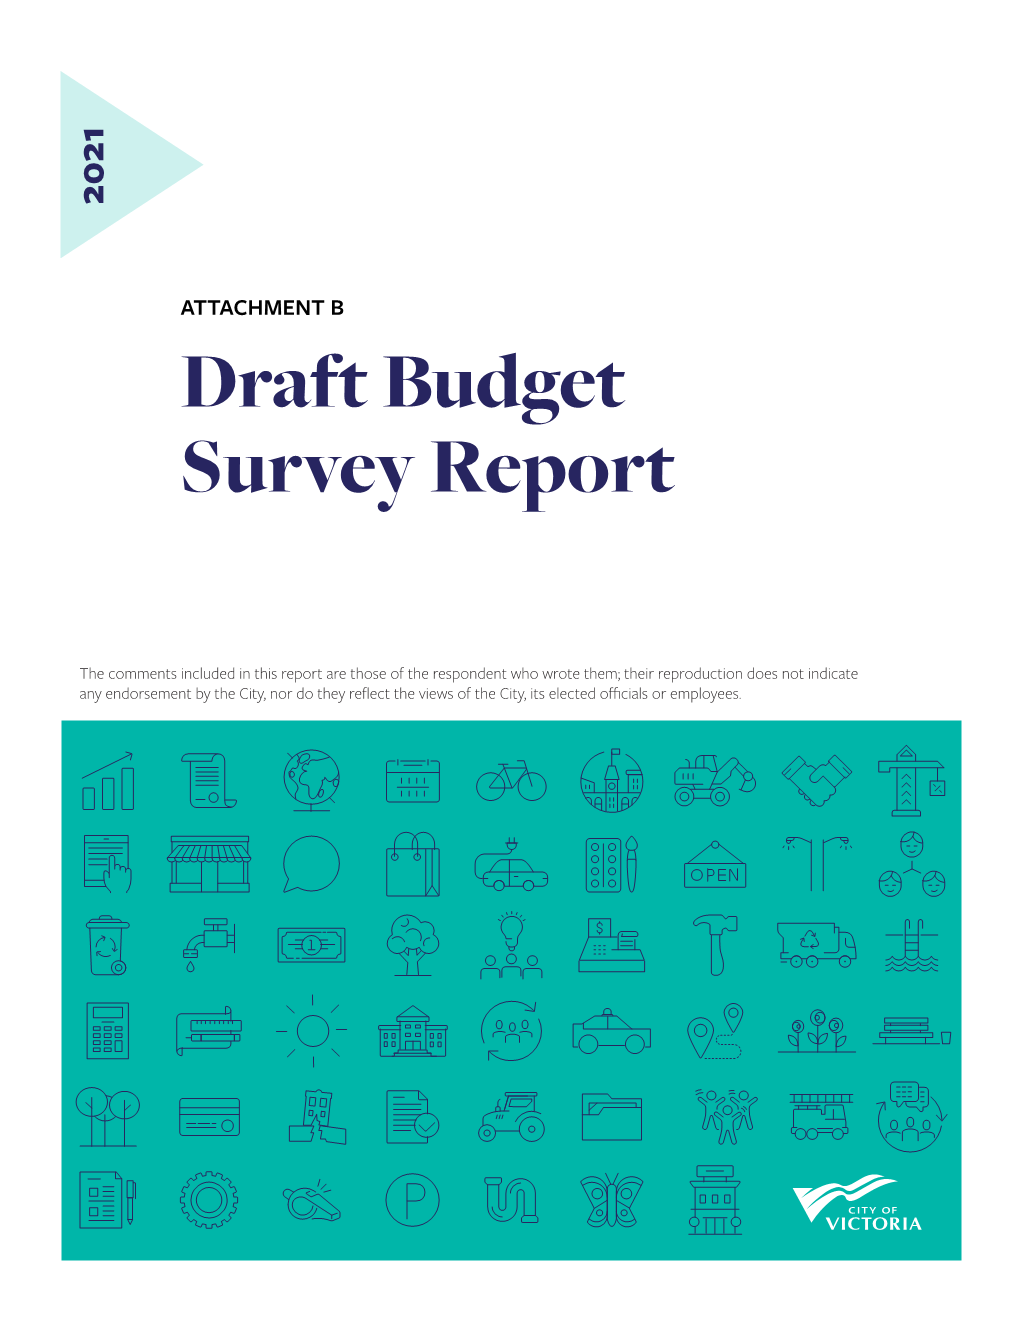 Attachment B 2021 Draft Budget Survey Report.Pdf